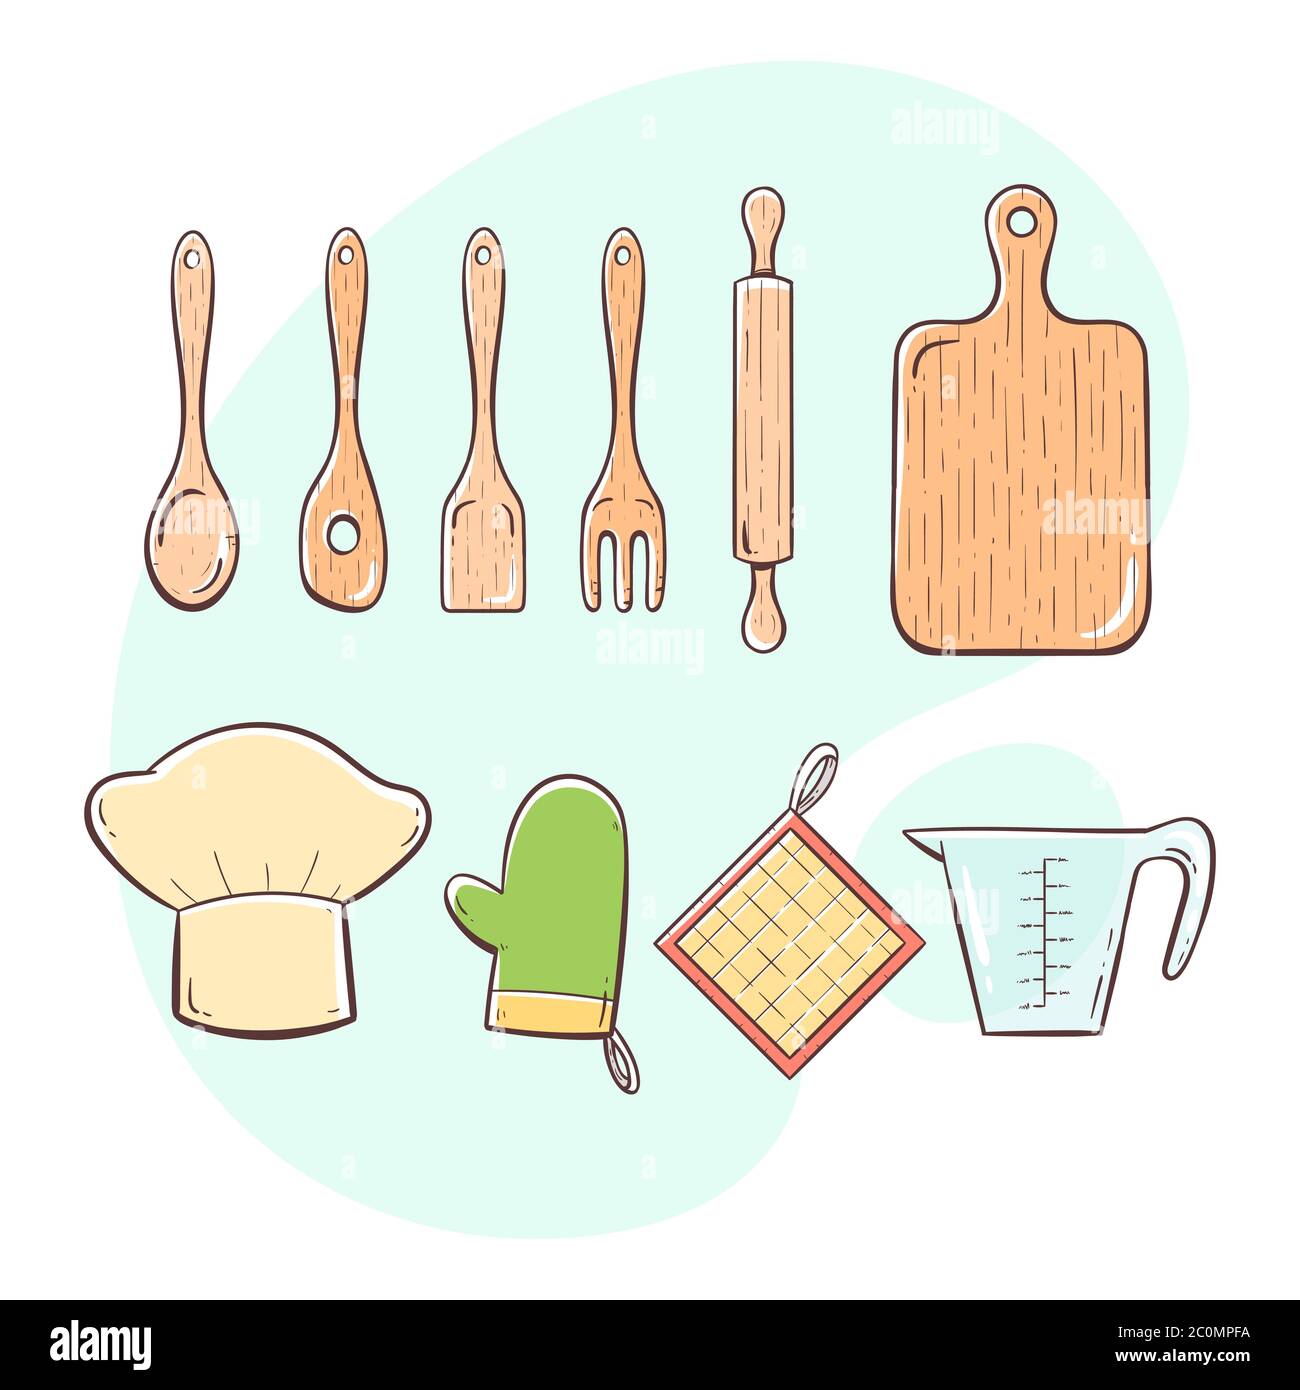 Wooden kitchen utensils set of hand drawn art cute illustration